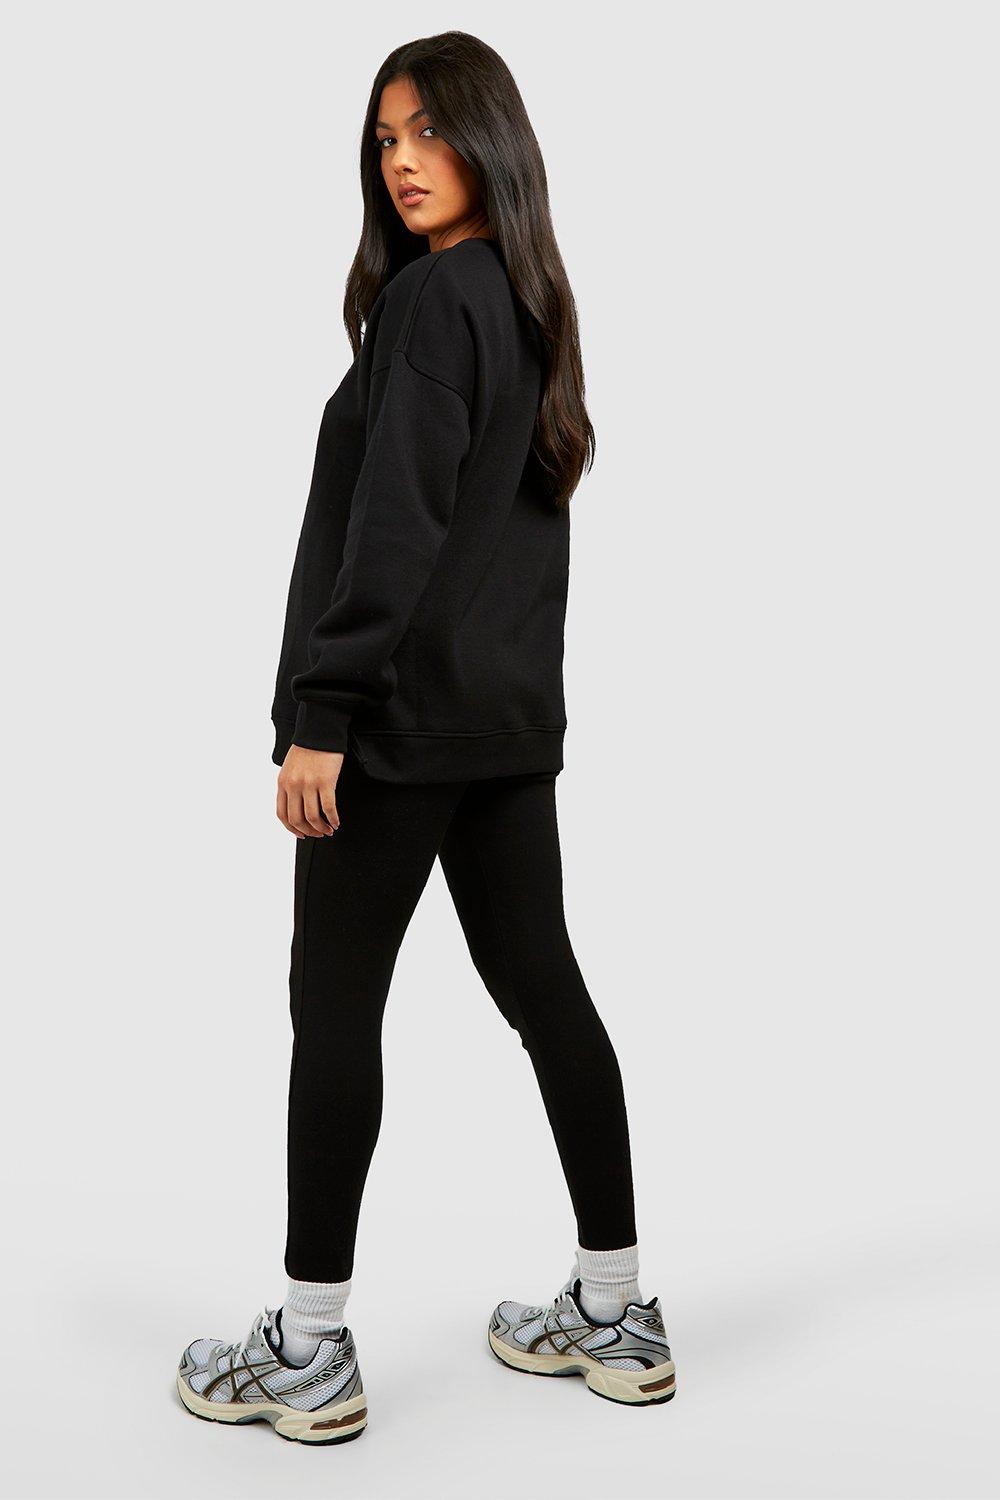 https://media.boohoo.com/i/boohoo/gzz39995_black_xl_1/female-black-maternity-side-split-sweatshirt-&-legging-set